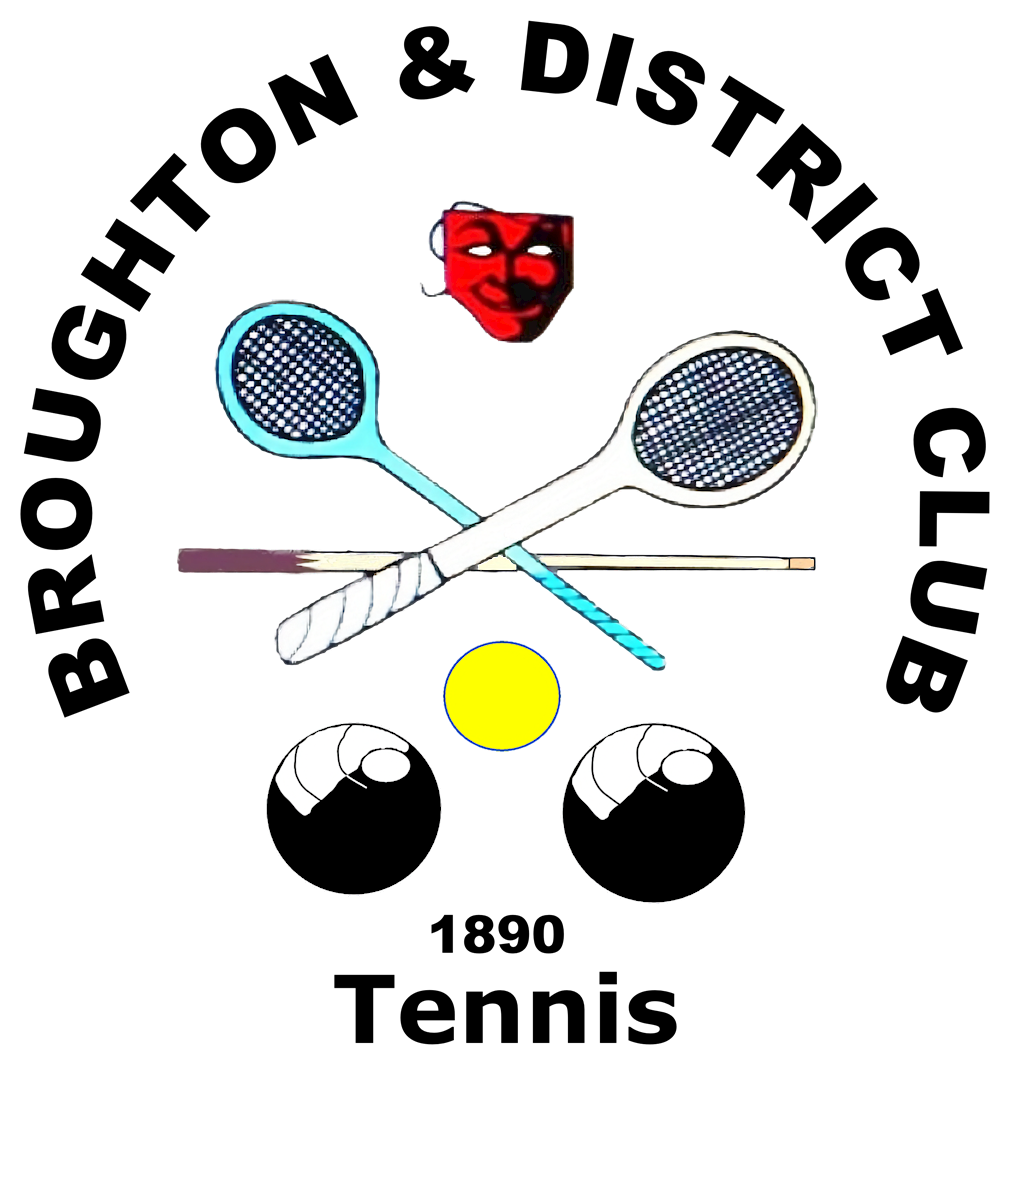 Broughton & District Tennis Club